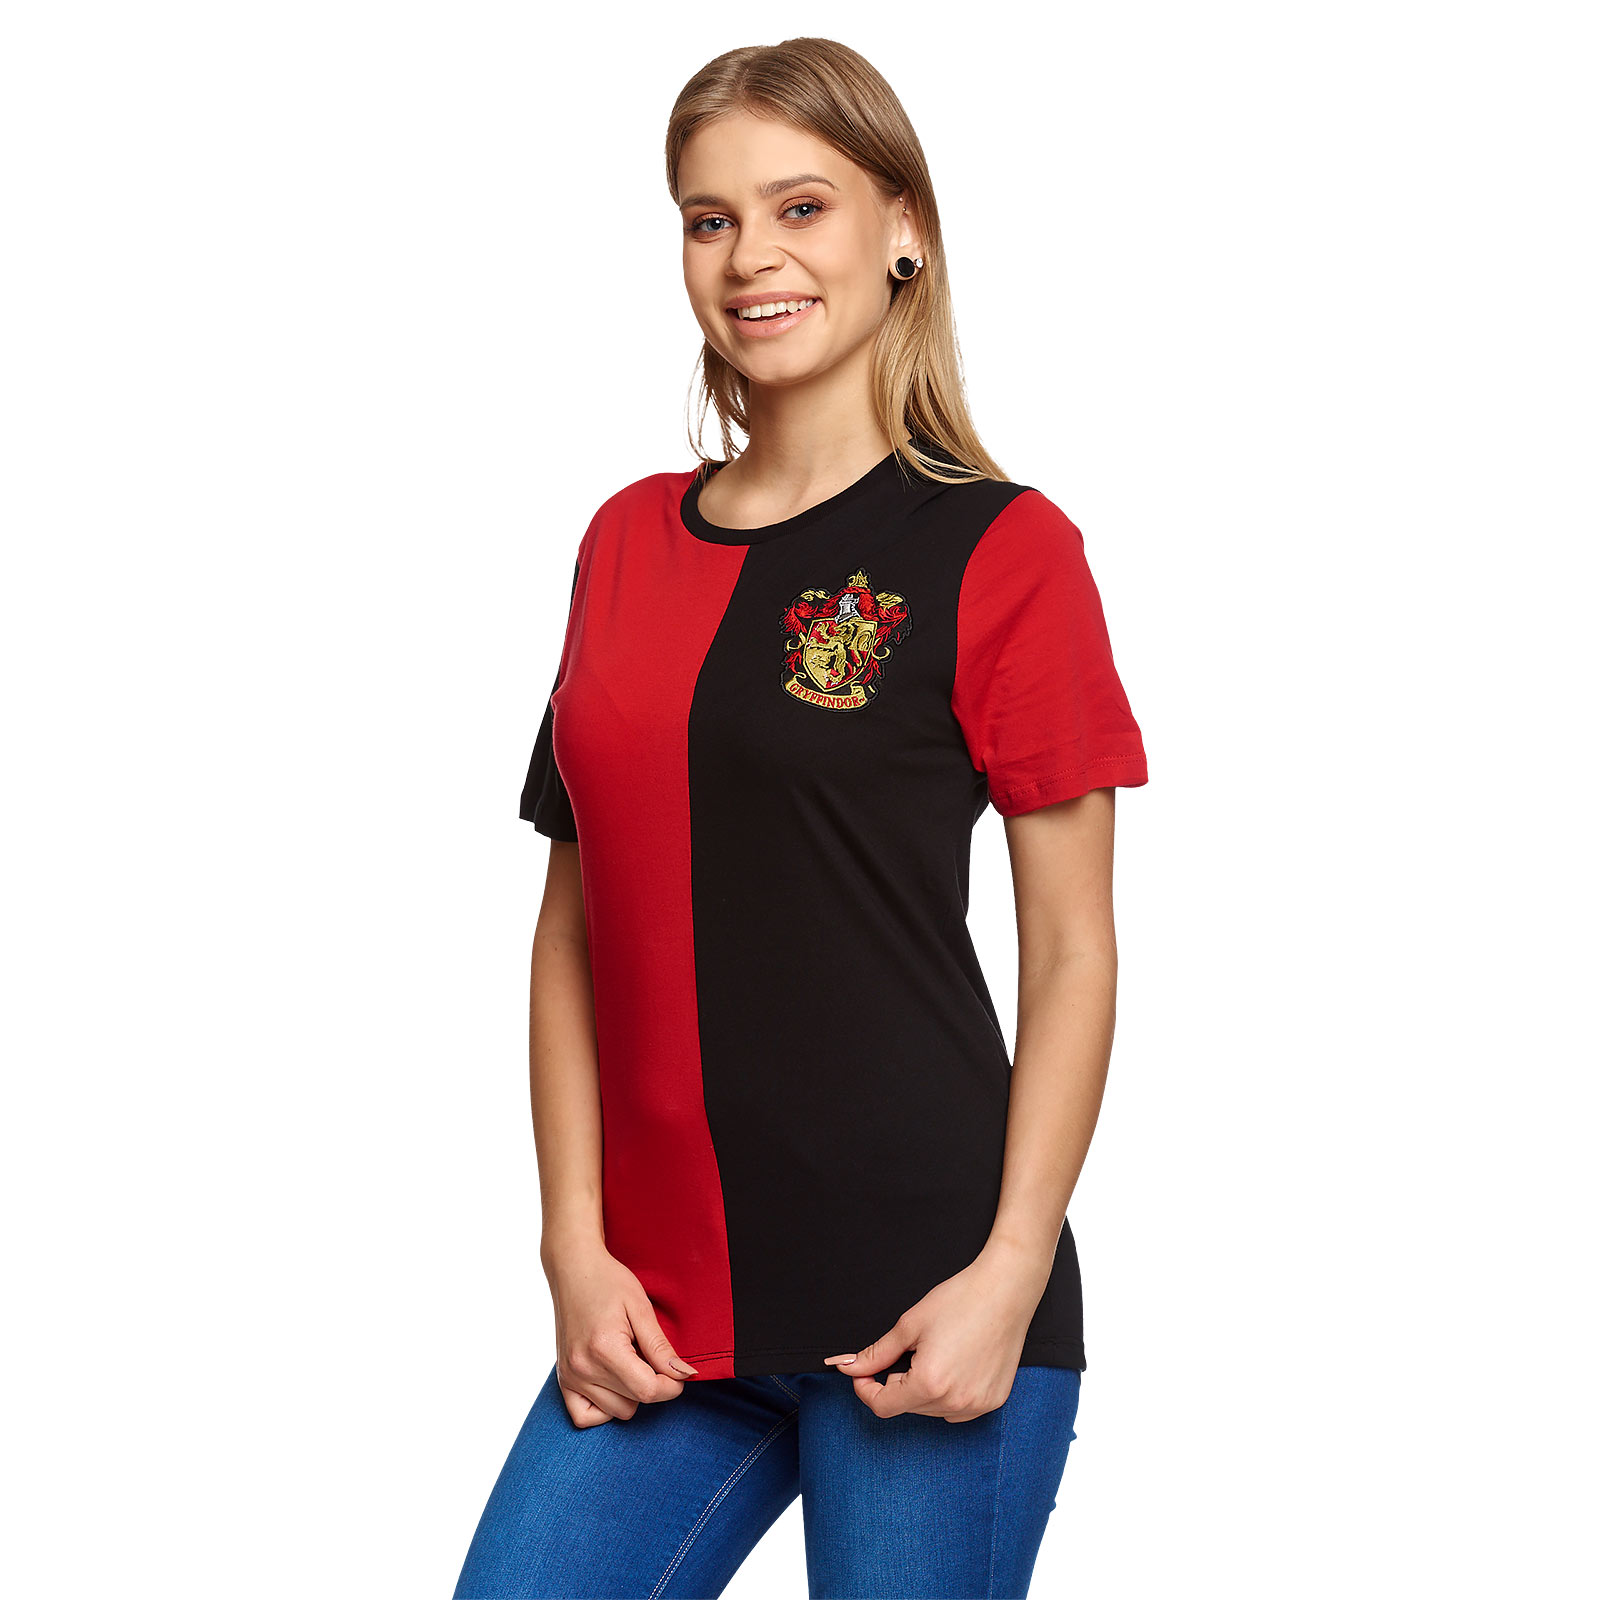 Harry Potter - Gryffindor Toernooi T-Shirt Rood-Zwart